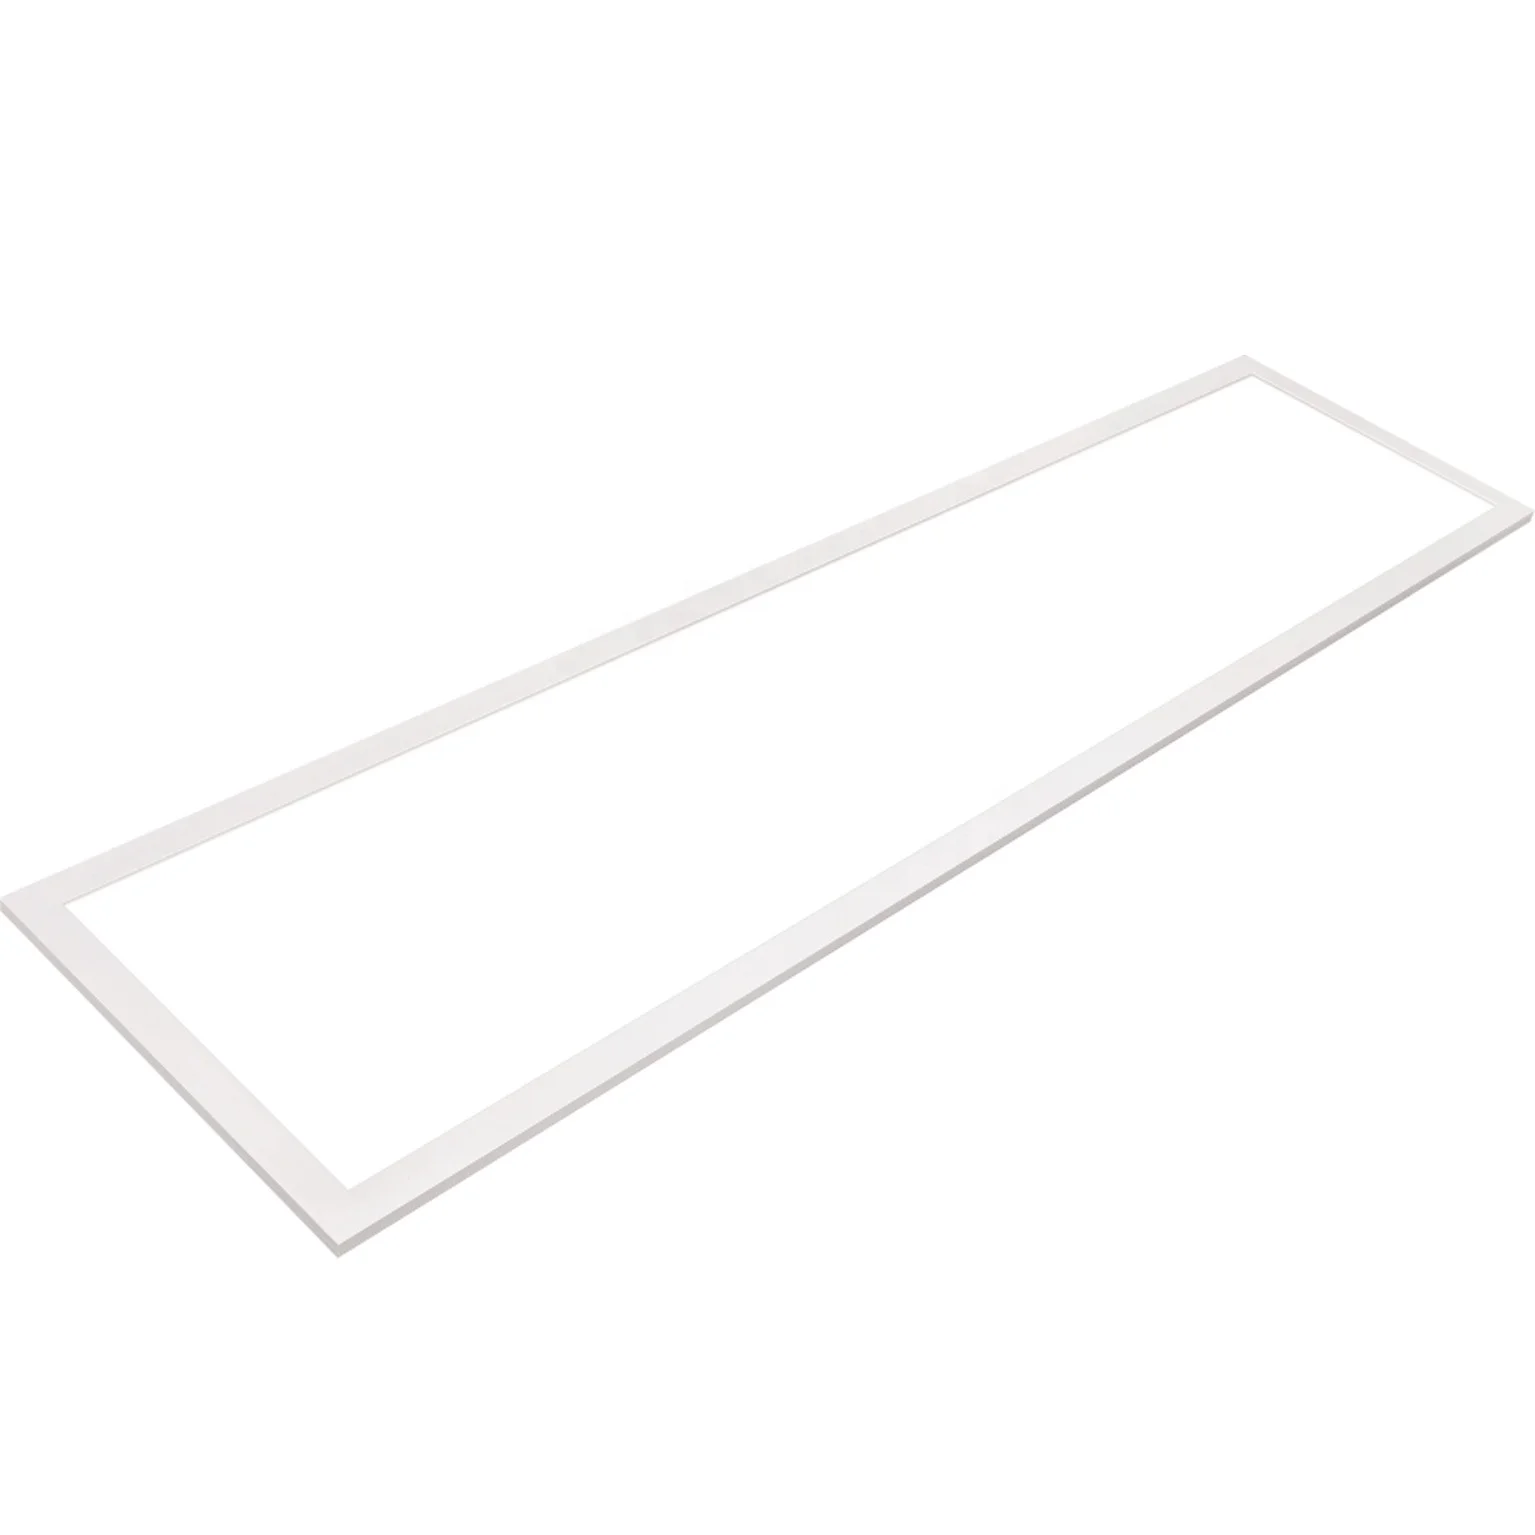 295x1195mm 300x1200mm 36W 100LM/W Edge-Lit Slim Led panel light ceiling light panel Flat/Step frame